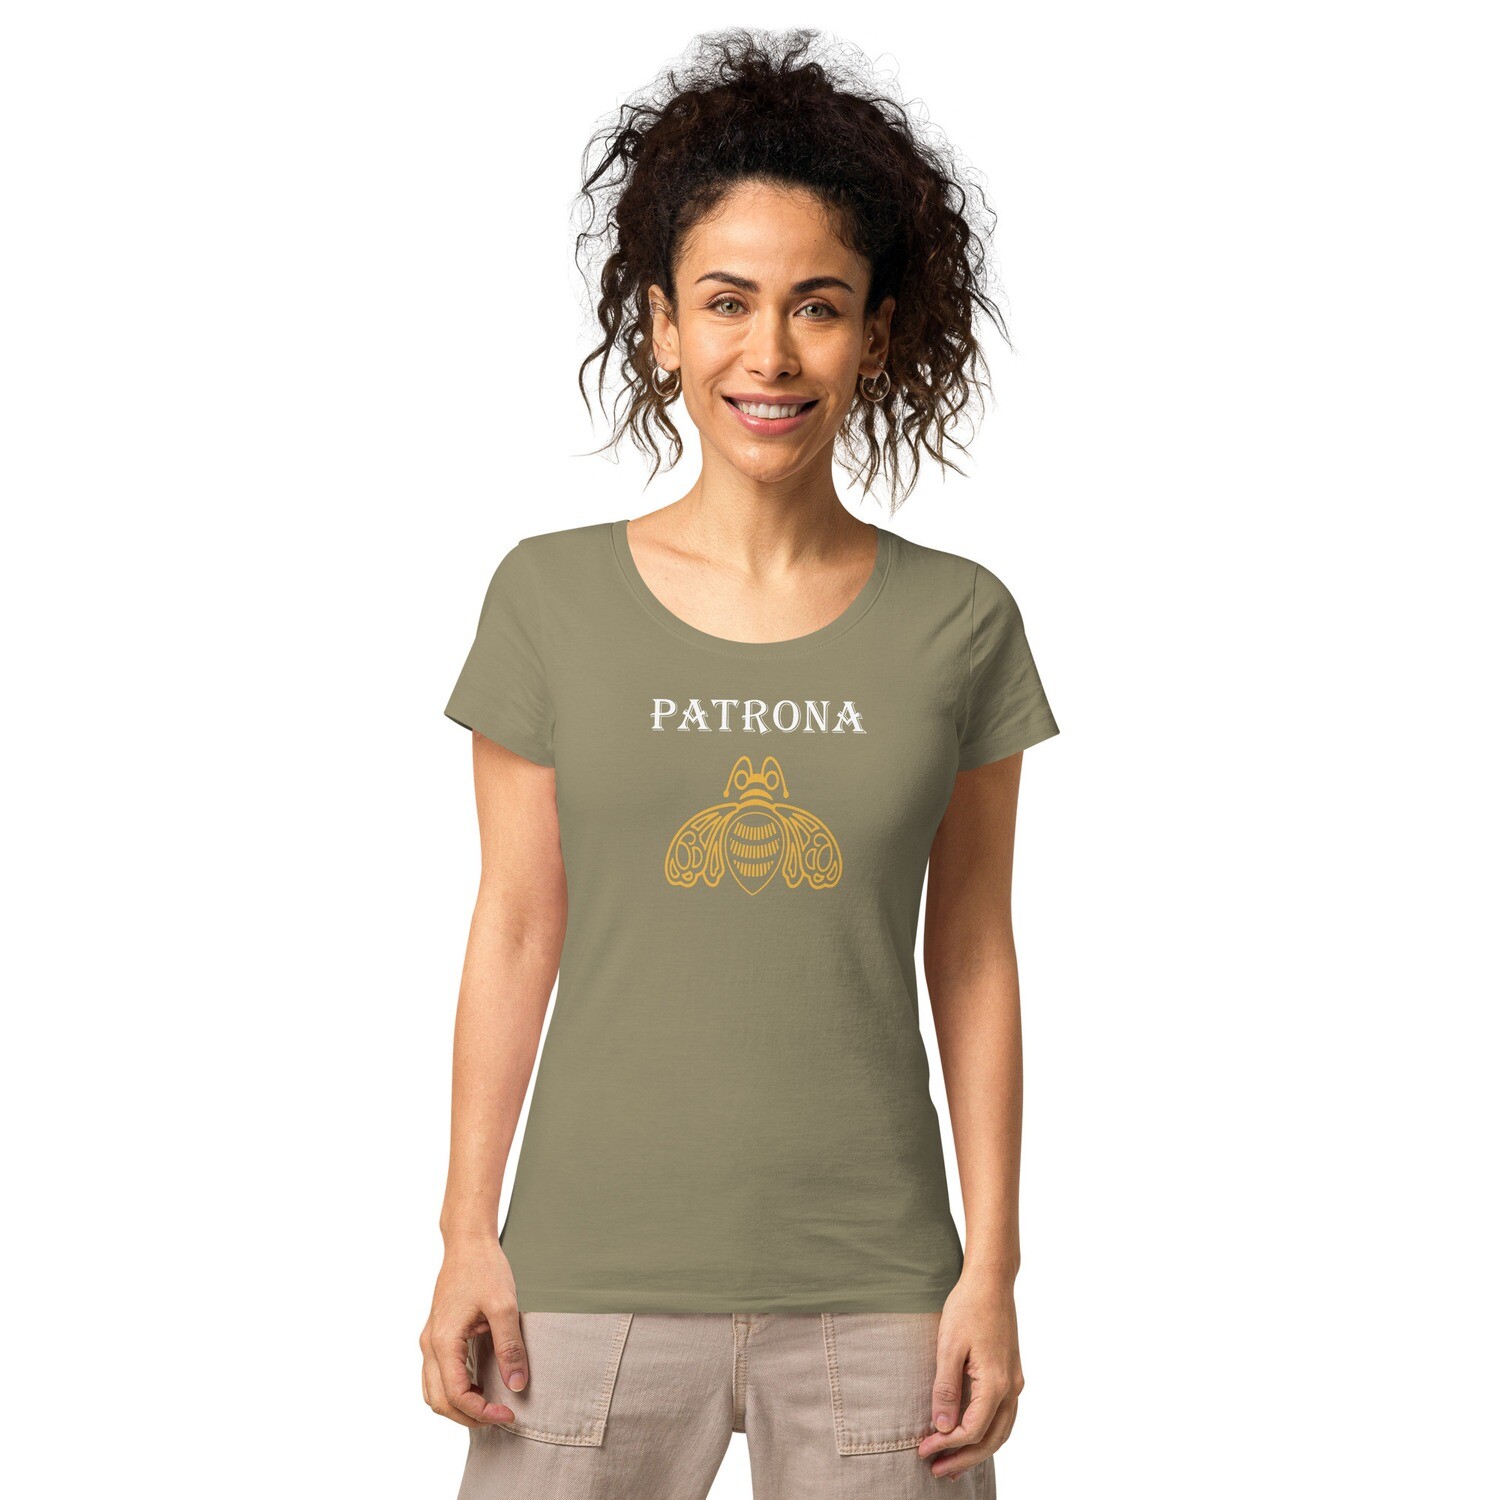 PATRONA, Female Boss, tequila label, Chingona women’s basic organic t-shirt